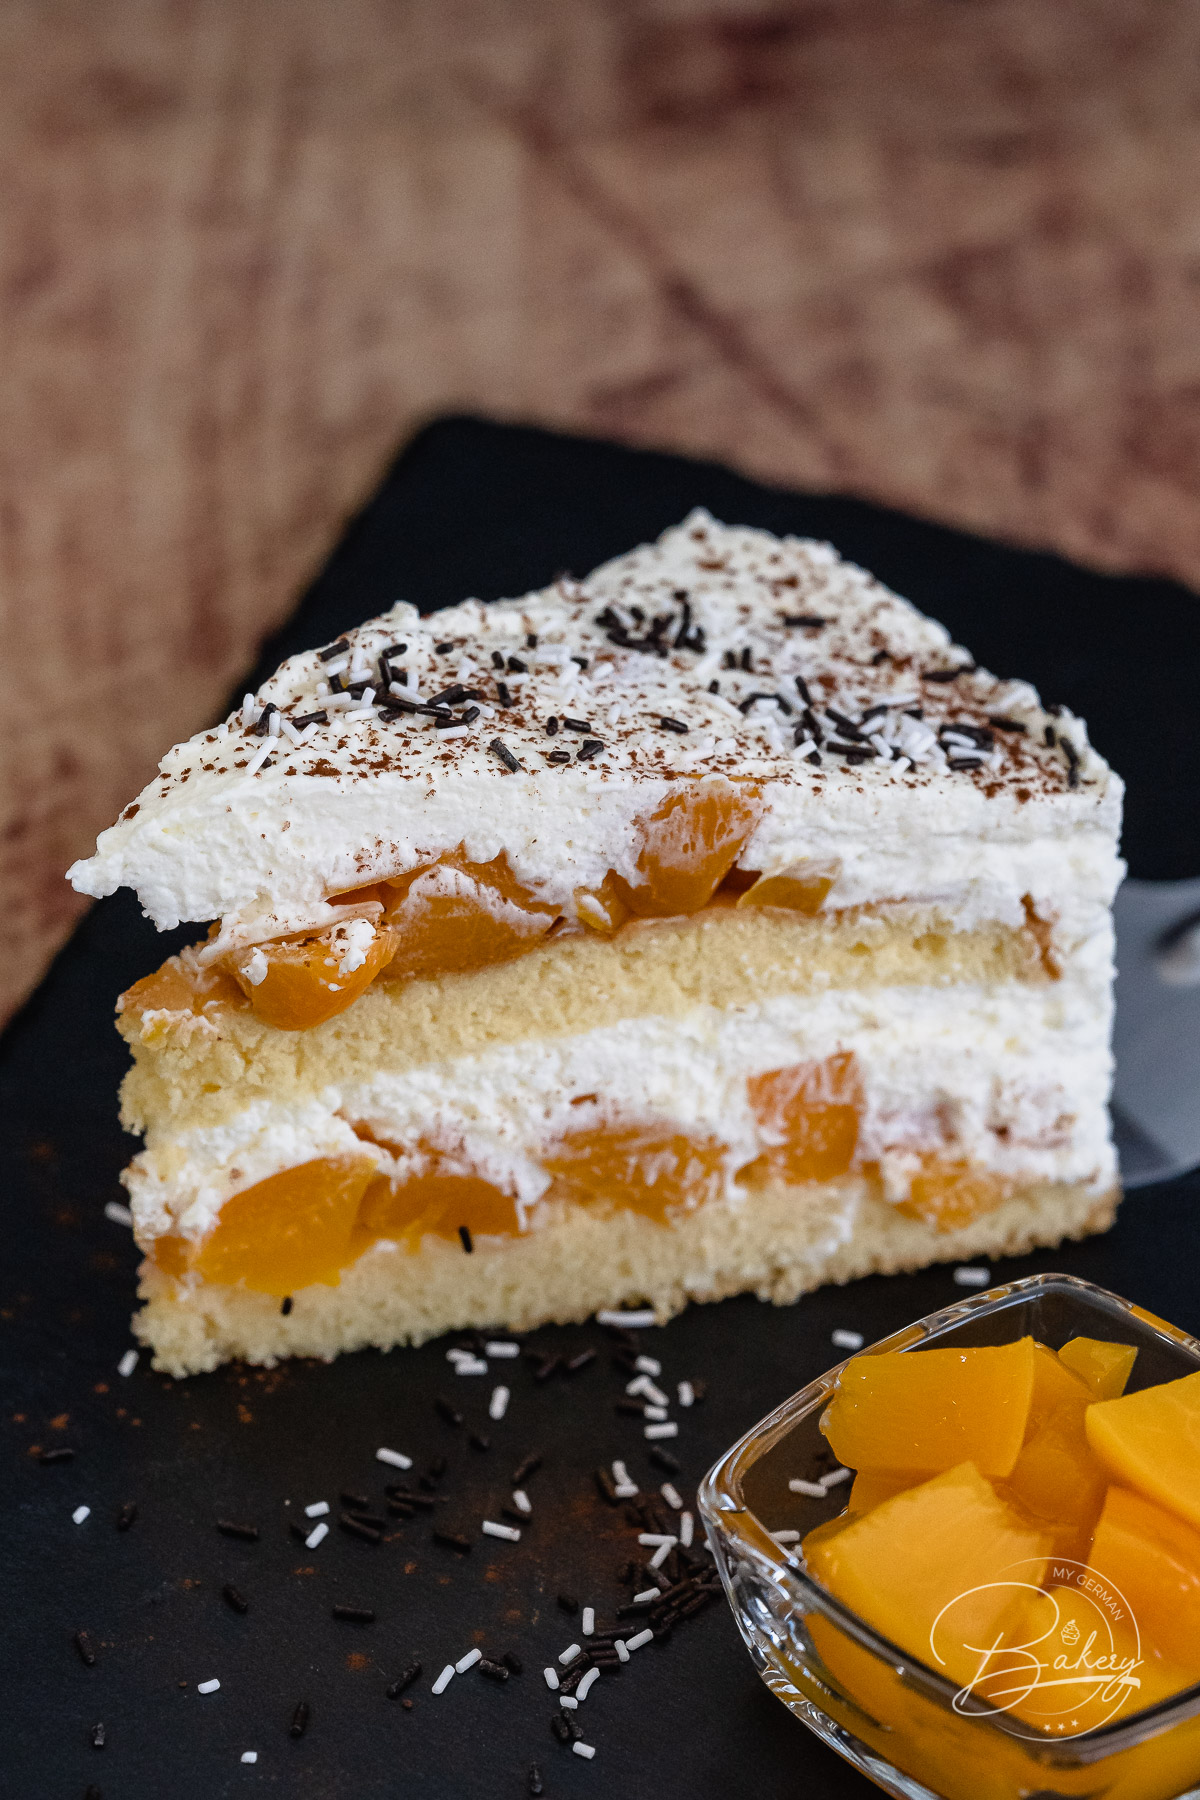 Peach cake recipe - Sponge cream cake with peach - fruity and delicious - Cream cake with fruit - Cream cake for weddings, birthdays and guests - Peach cream cake - Loose sponge cake - made quickly